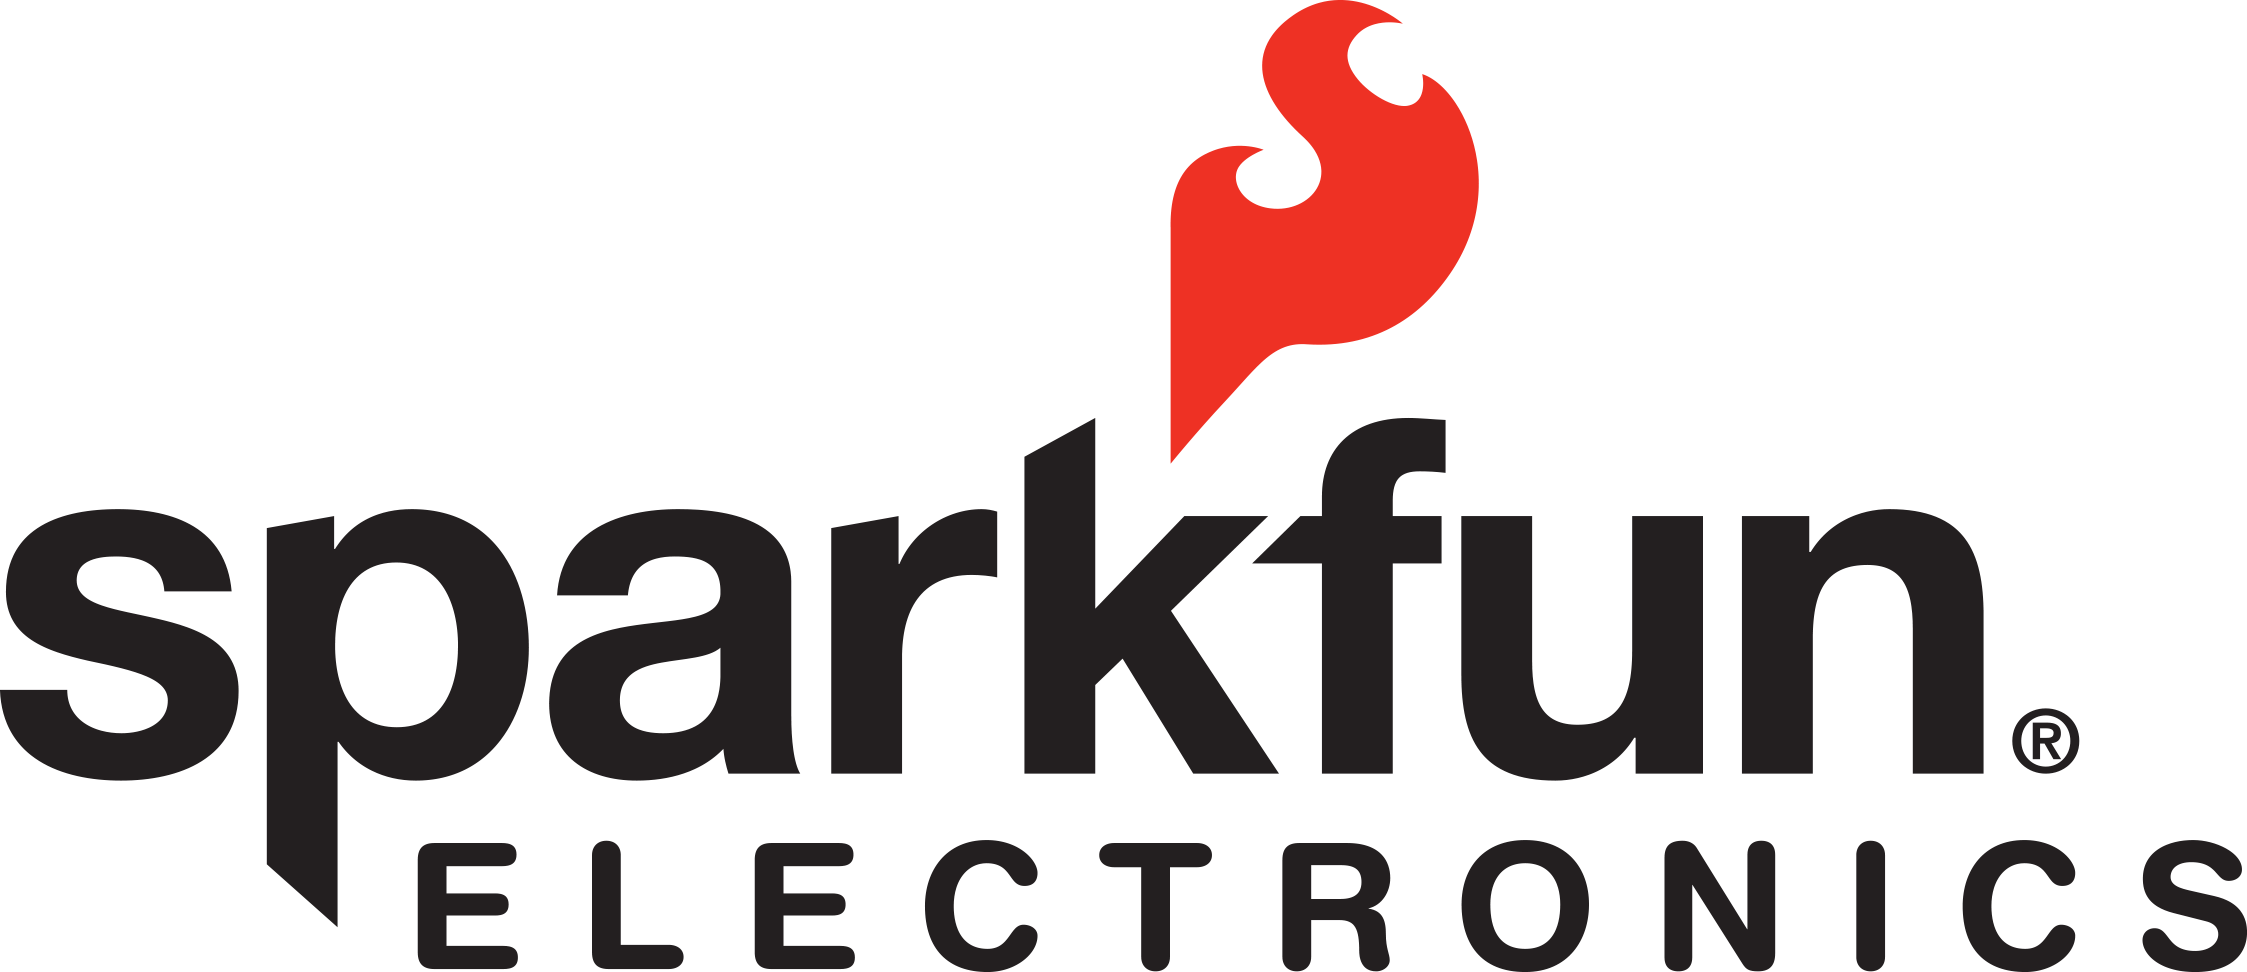 SparkFun Electronics LOGO